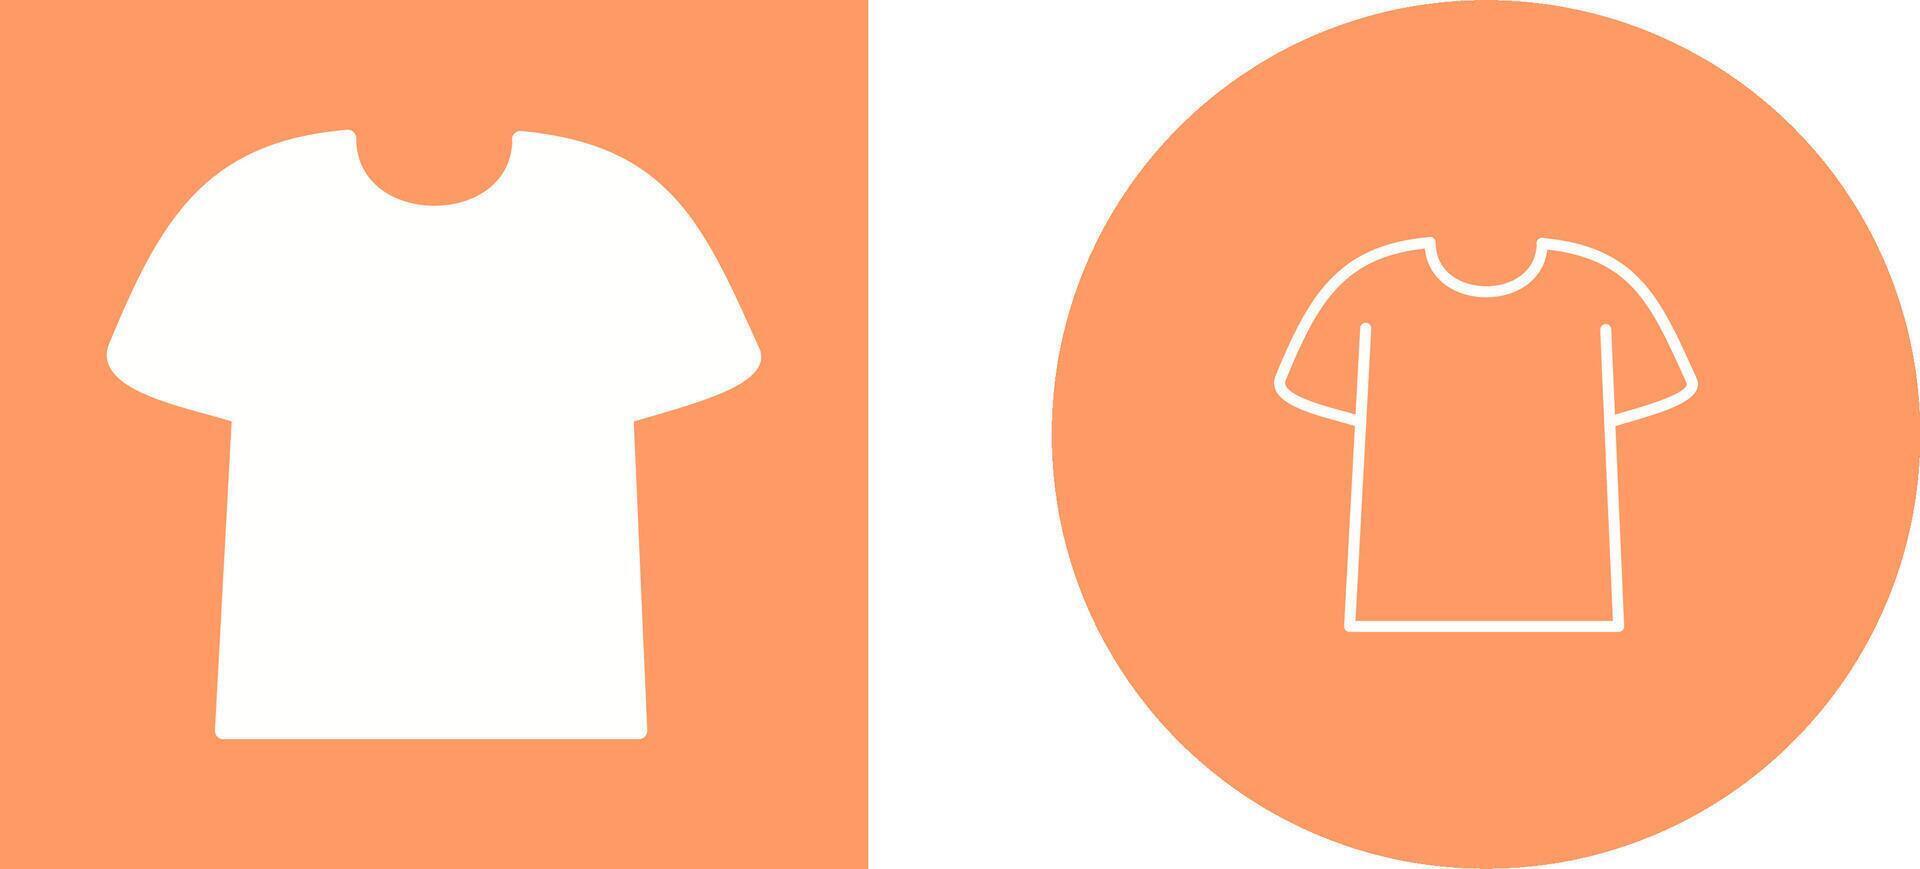 Plain T Shirt Vector Icon